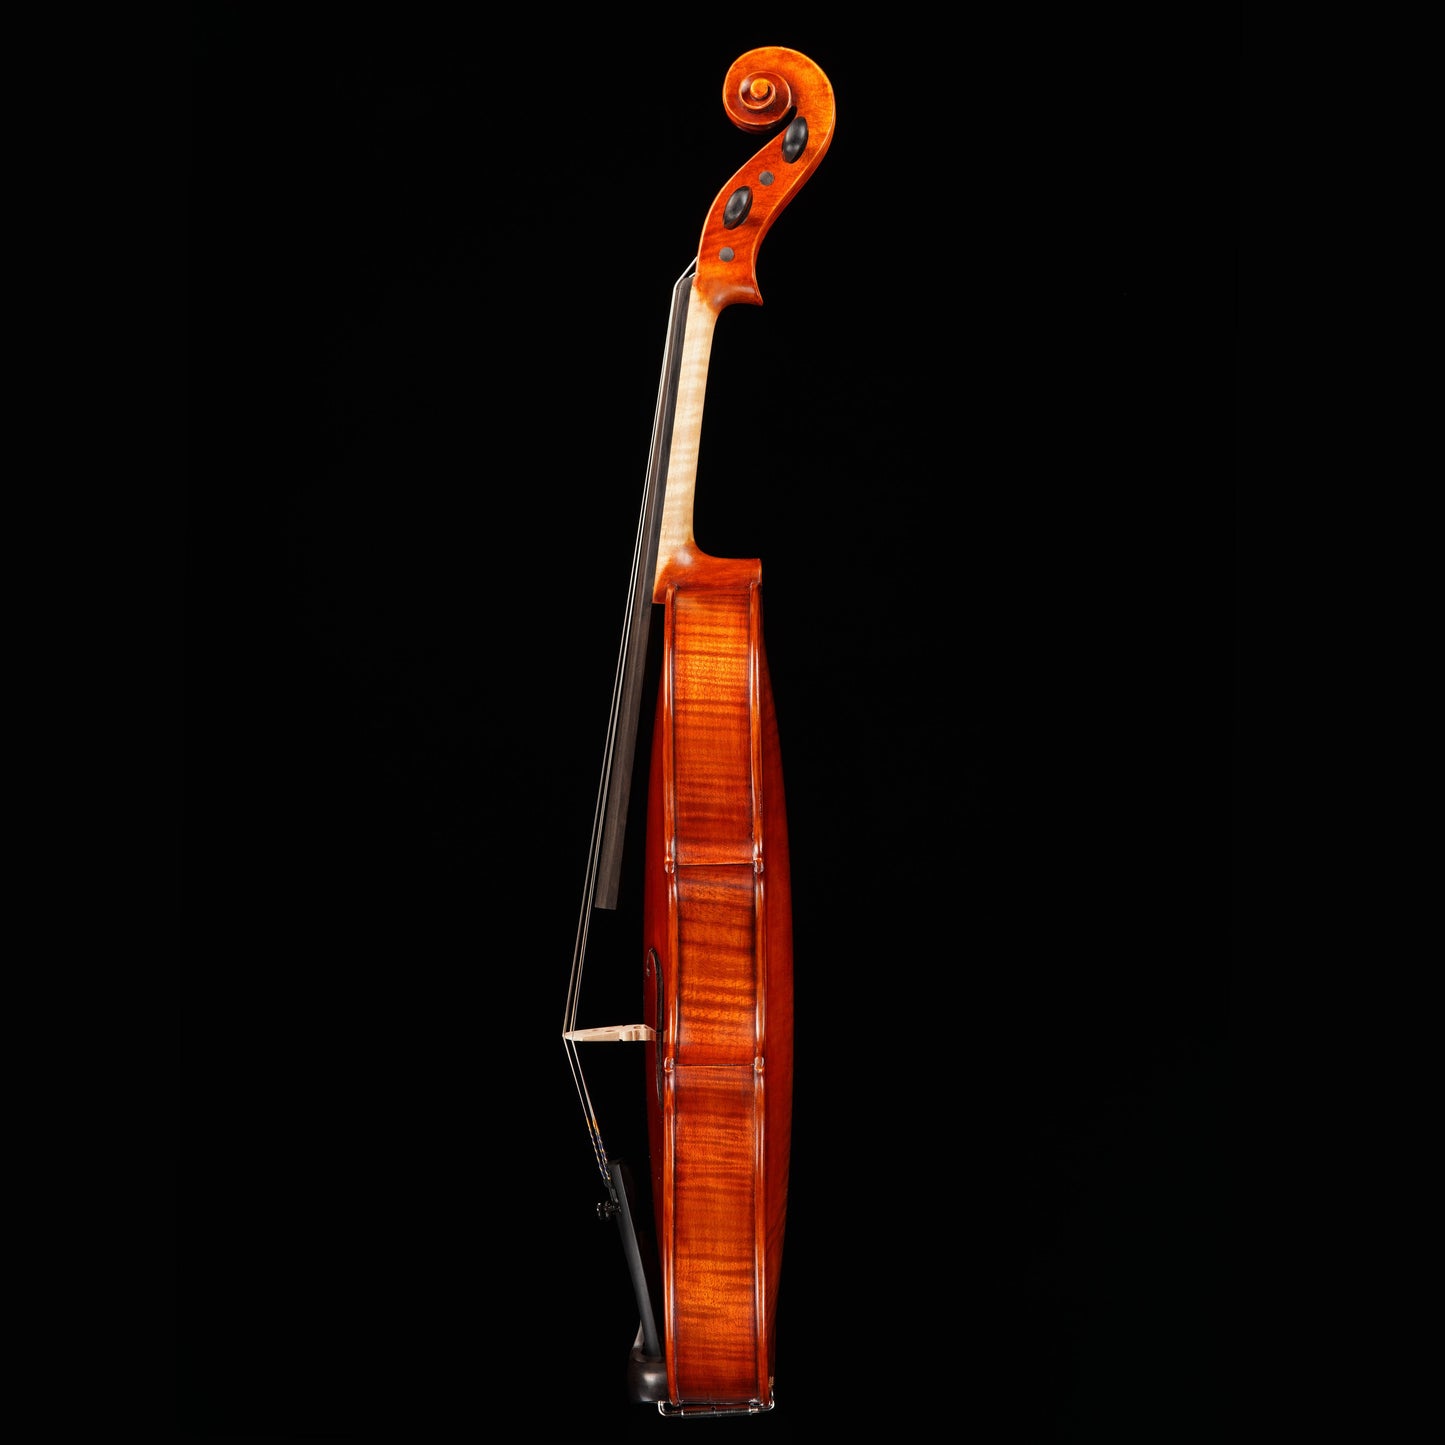 Antonio Scarlatti AS-201 "Sinfonica" Viola